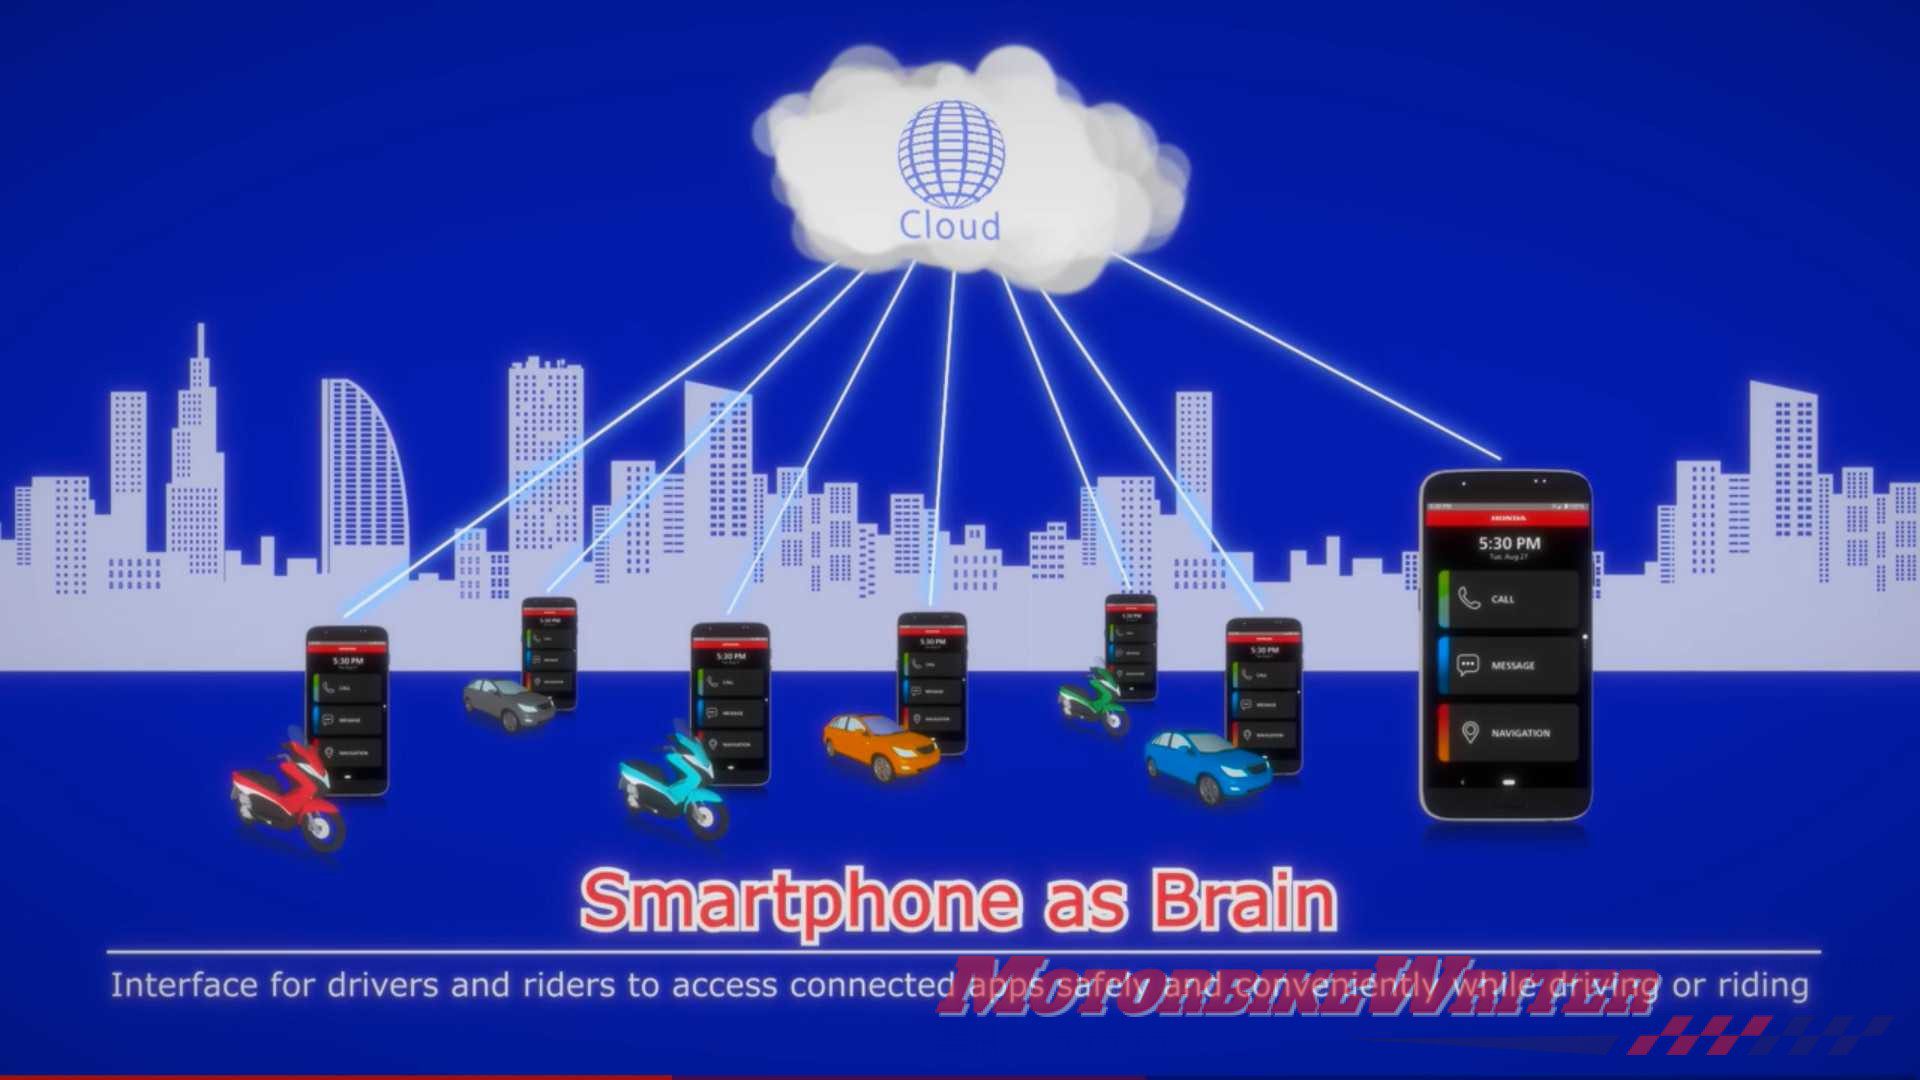 Honda integrating Smartphone As Brain system